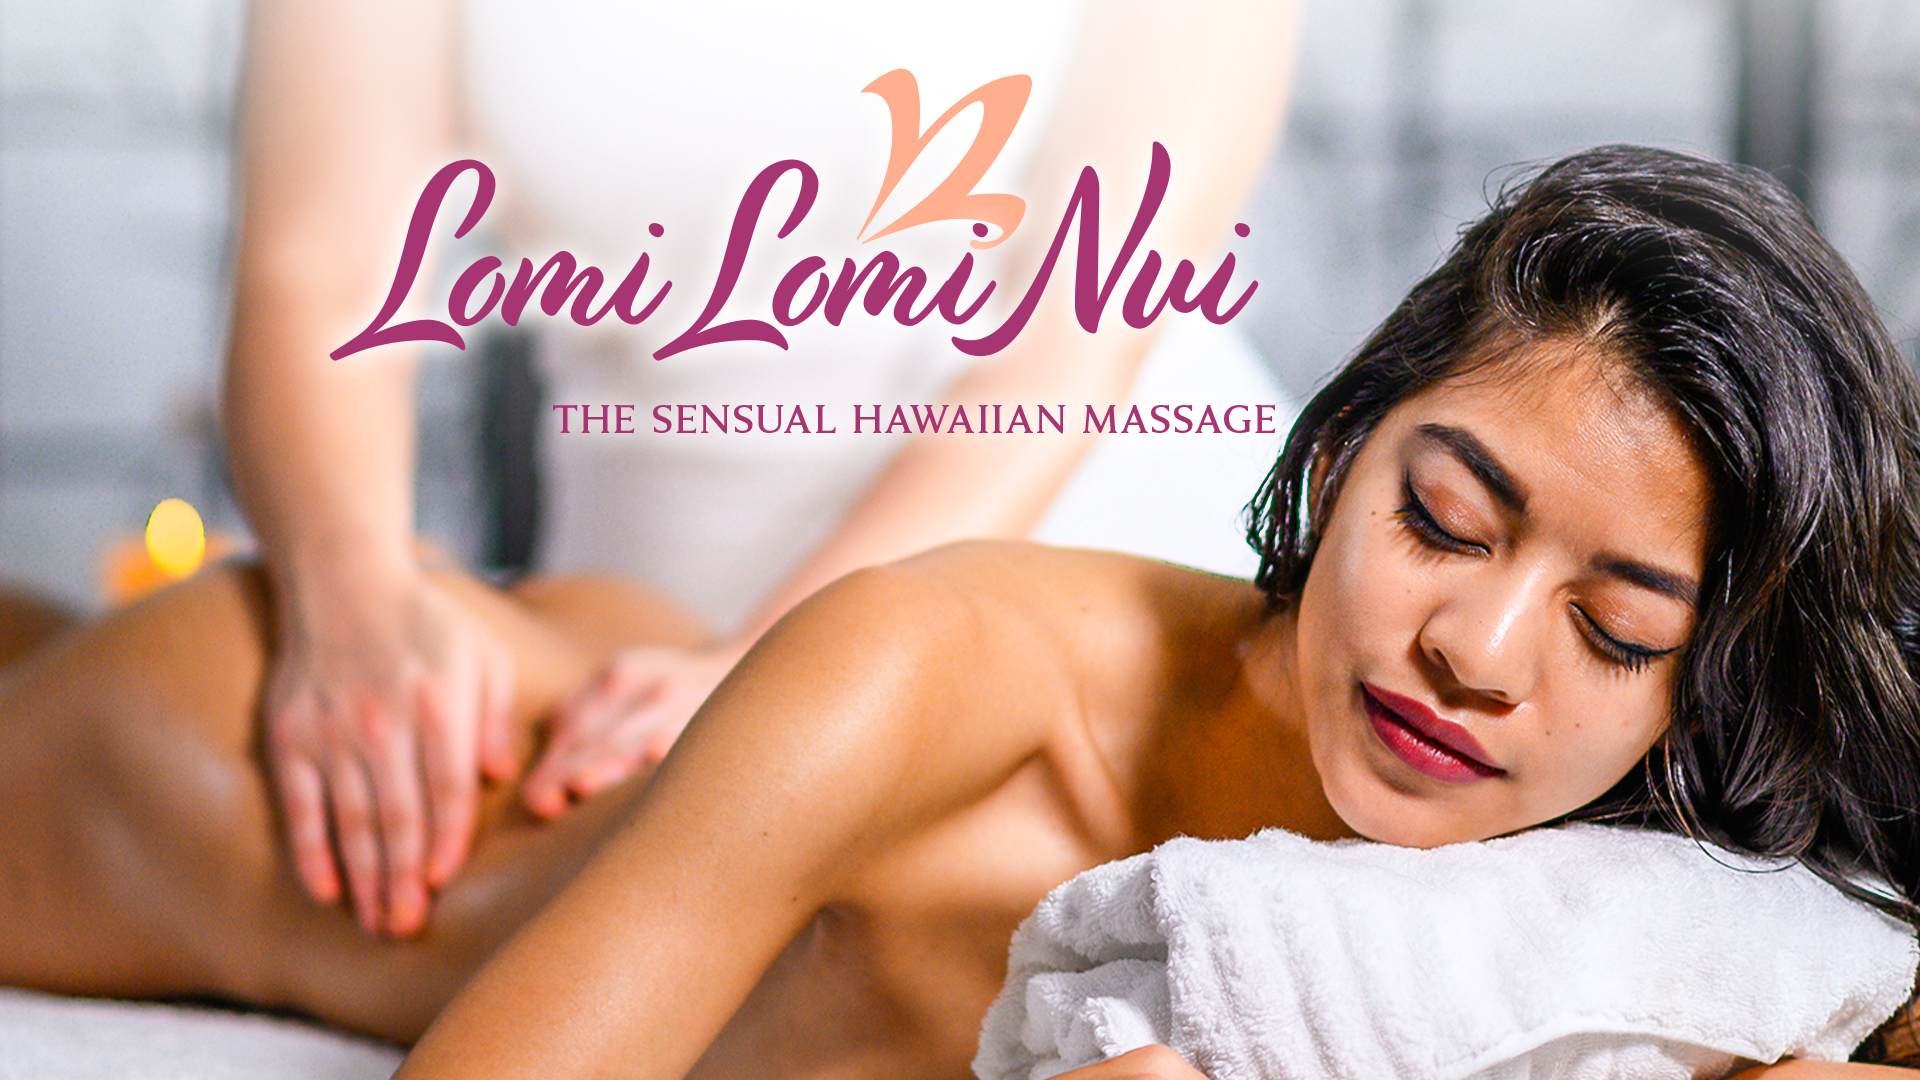 dionna davis recommends Lomi Lomi Massage Videos